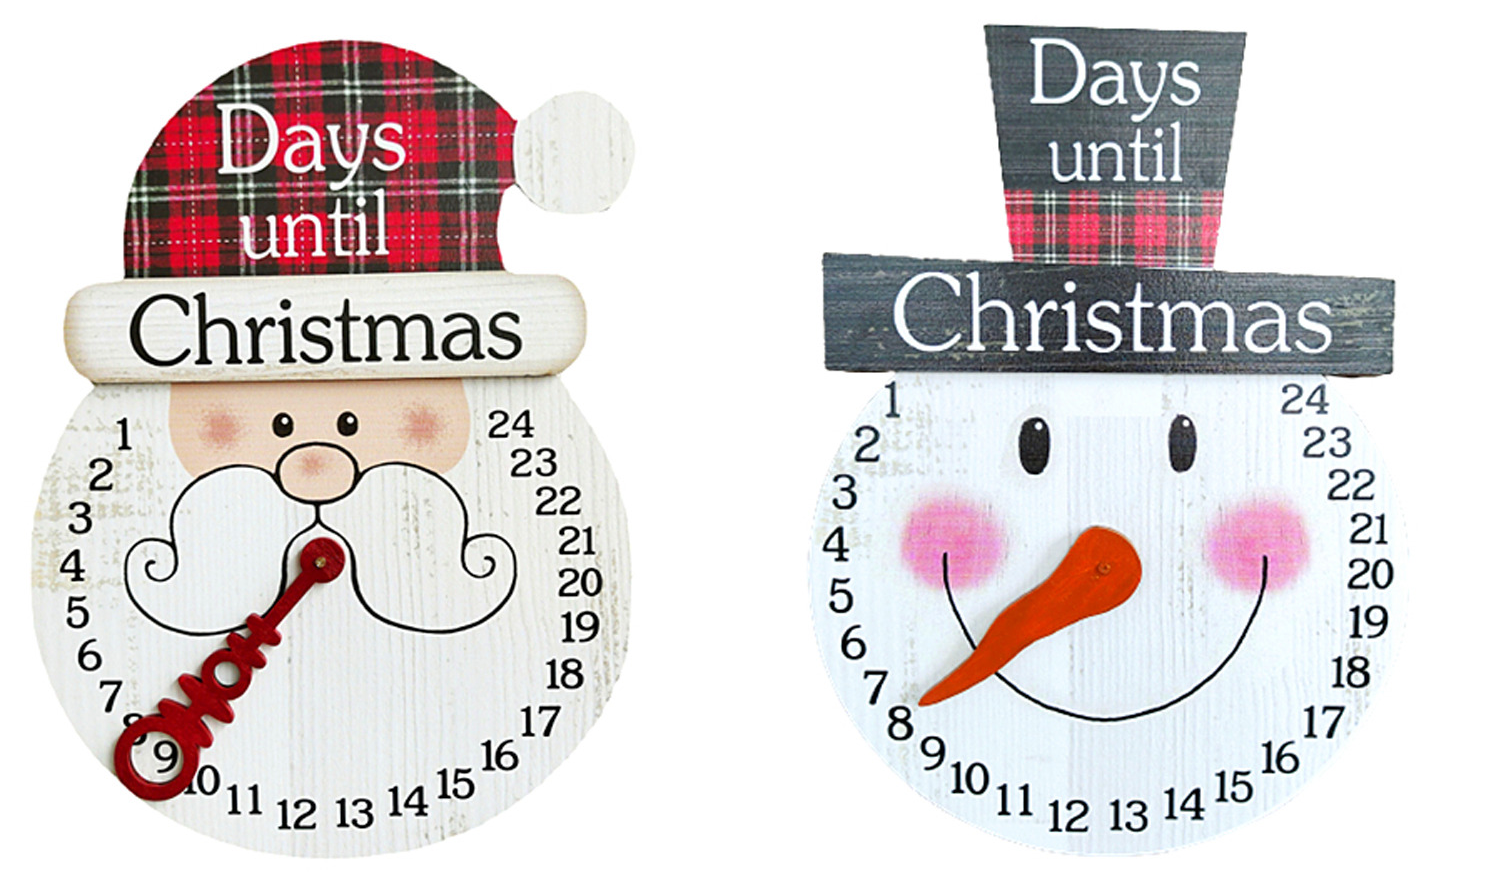 The Range Christmas Wooden Advent Calendar Countdown Clock - Red / Snowman or Santa